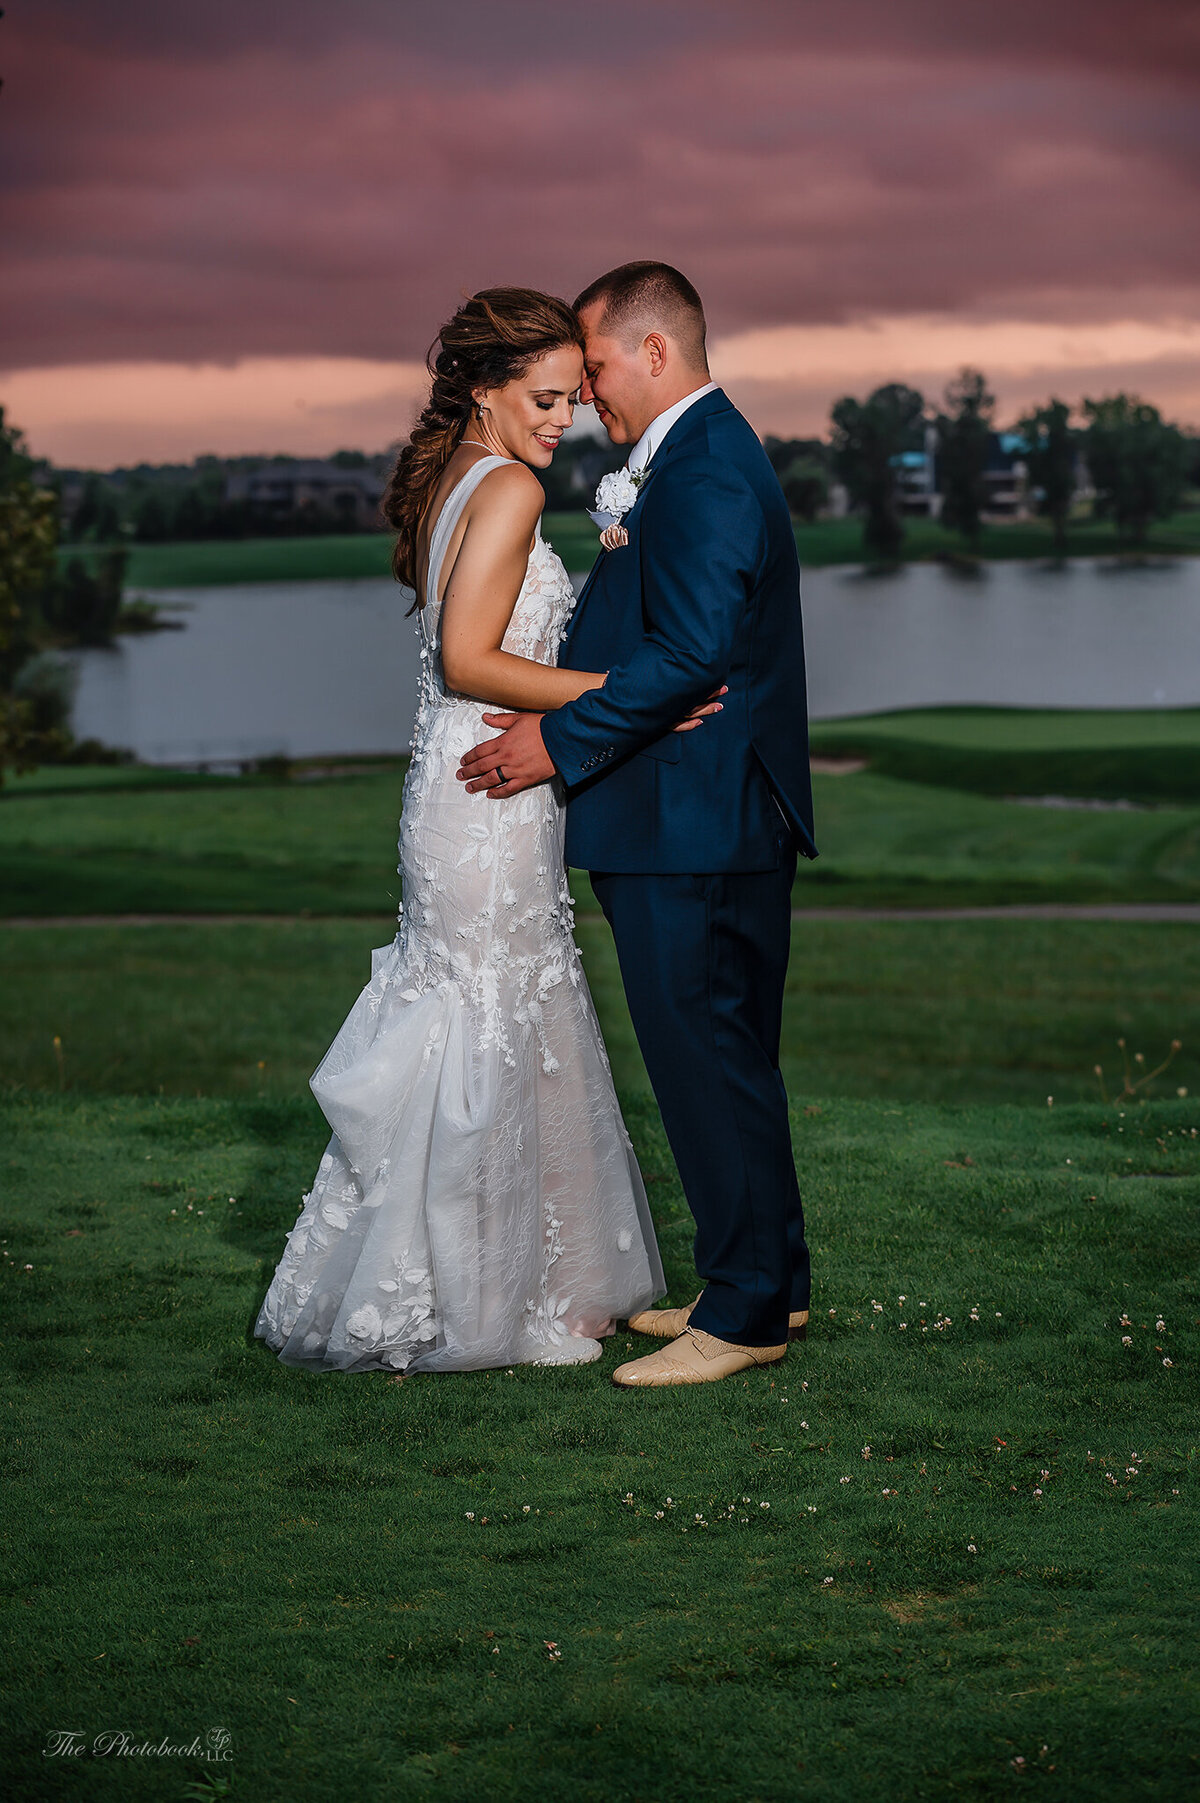 TP6_4260-Wedding Details, Ring, Wedding Photographer, Wedding Dress, Bride, Michigan Photographer, Sunset